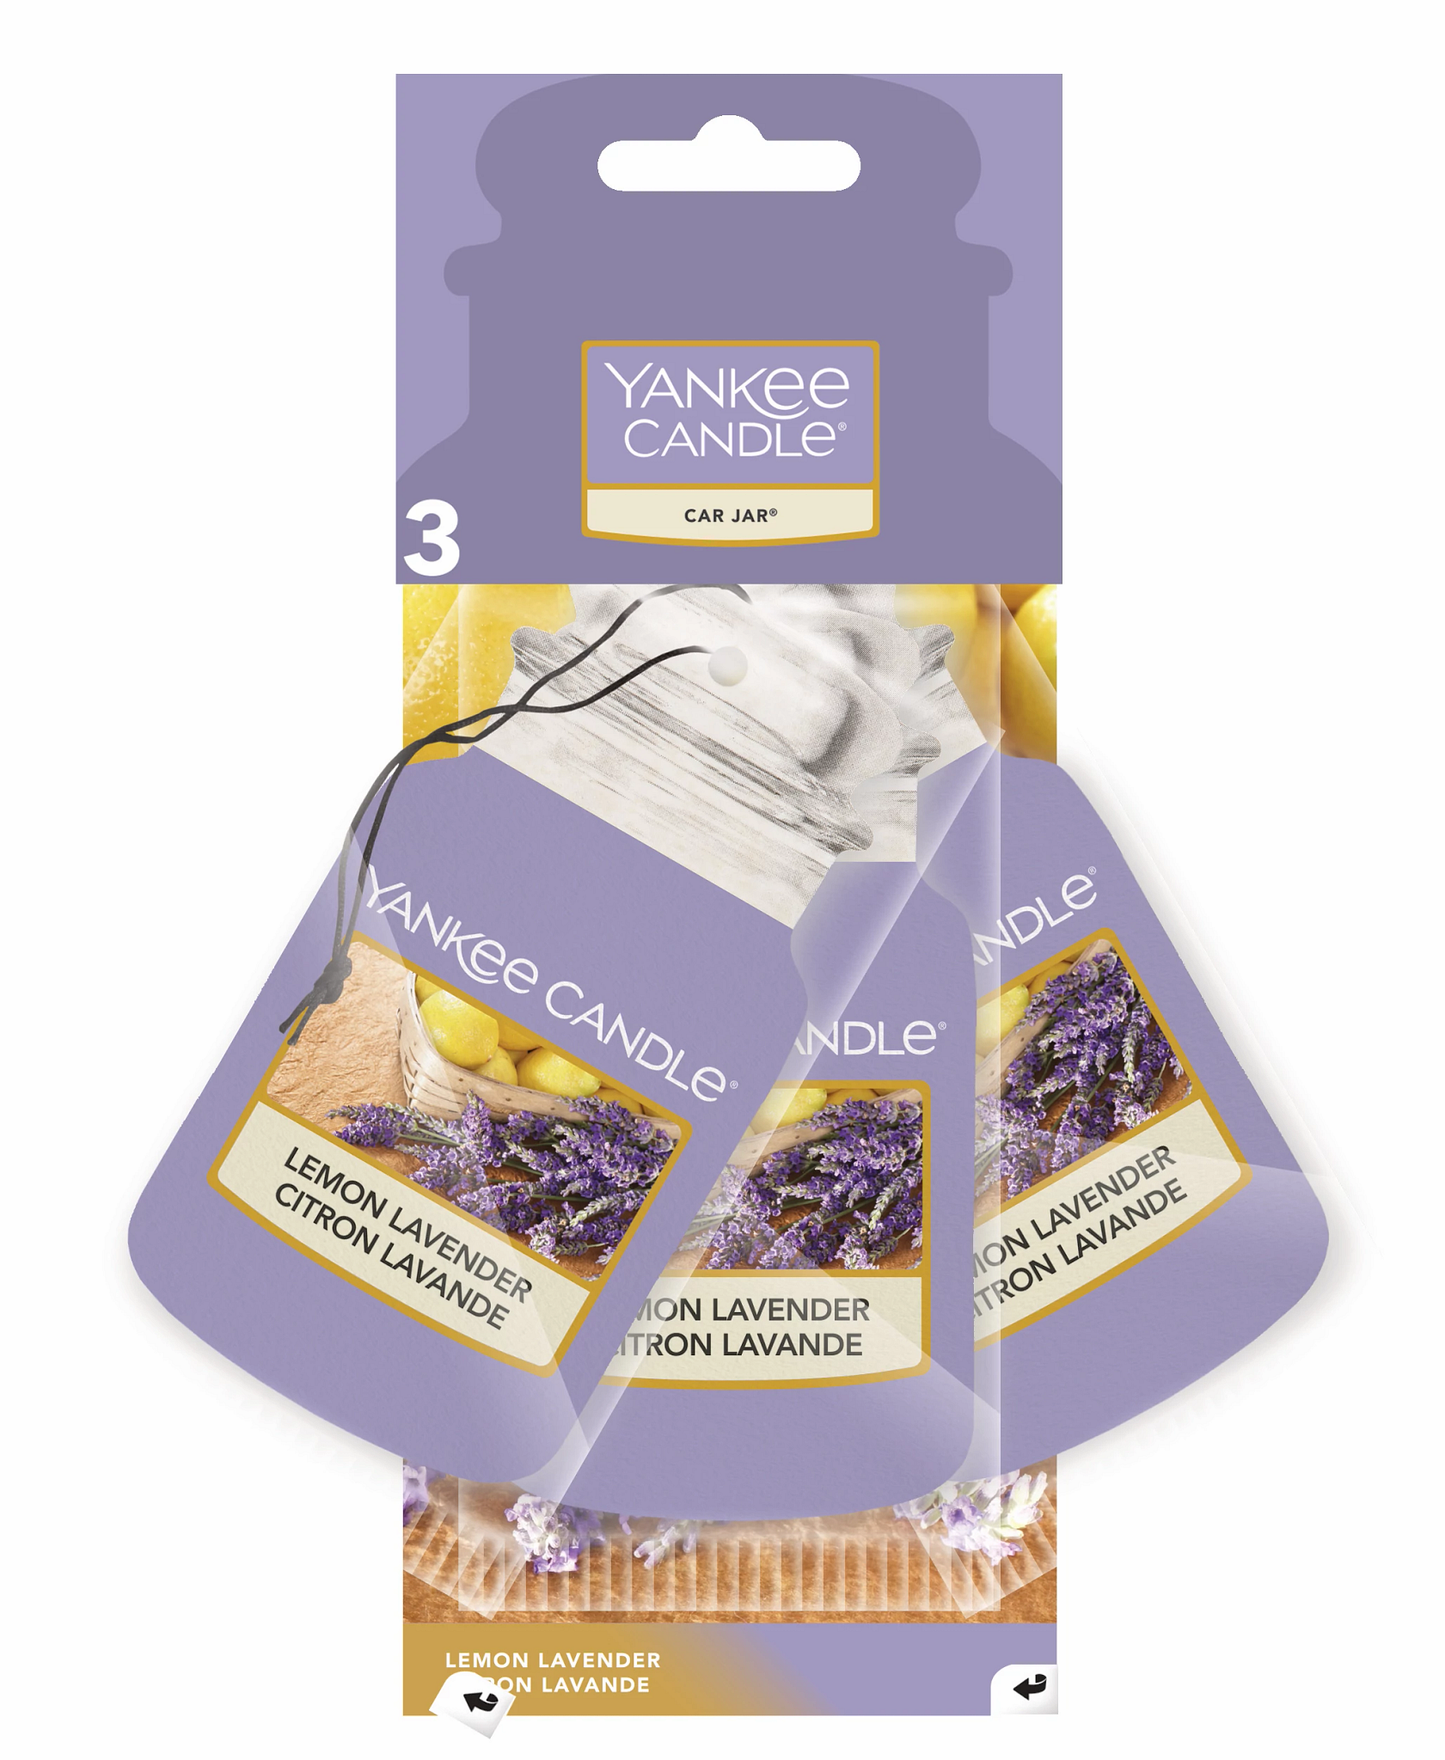 Yankee Candle - Car Jar Confezione Bonus Da 3 Lemon Lavender